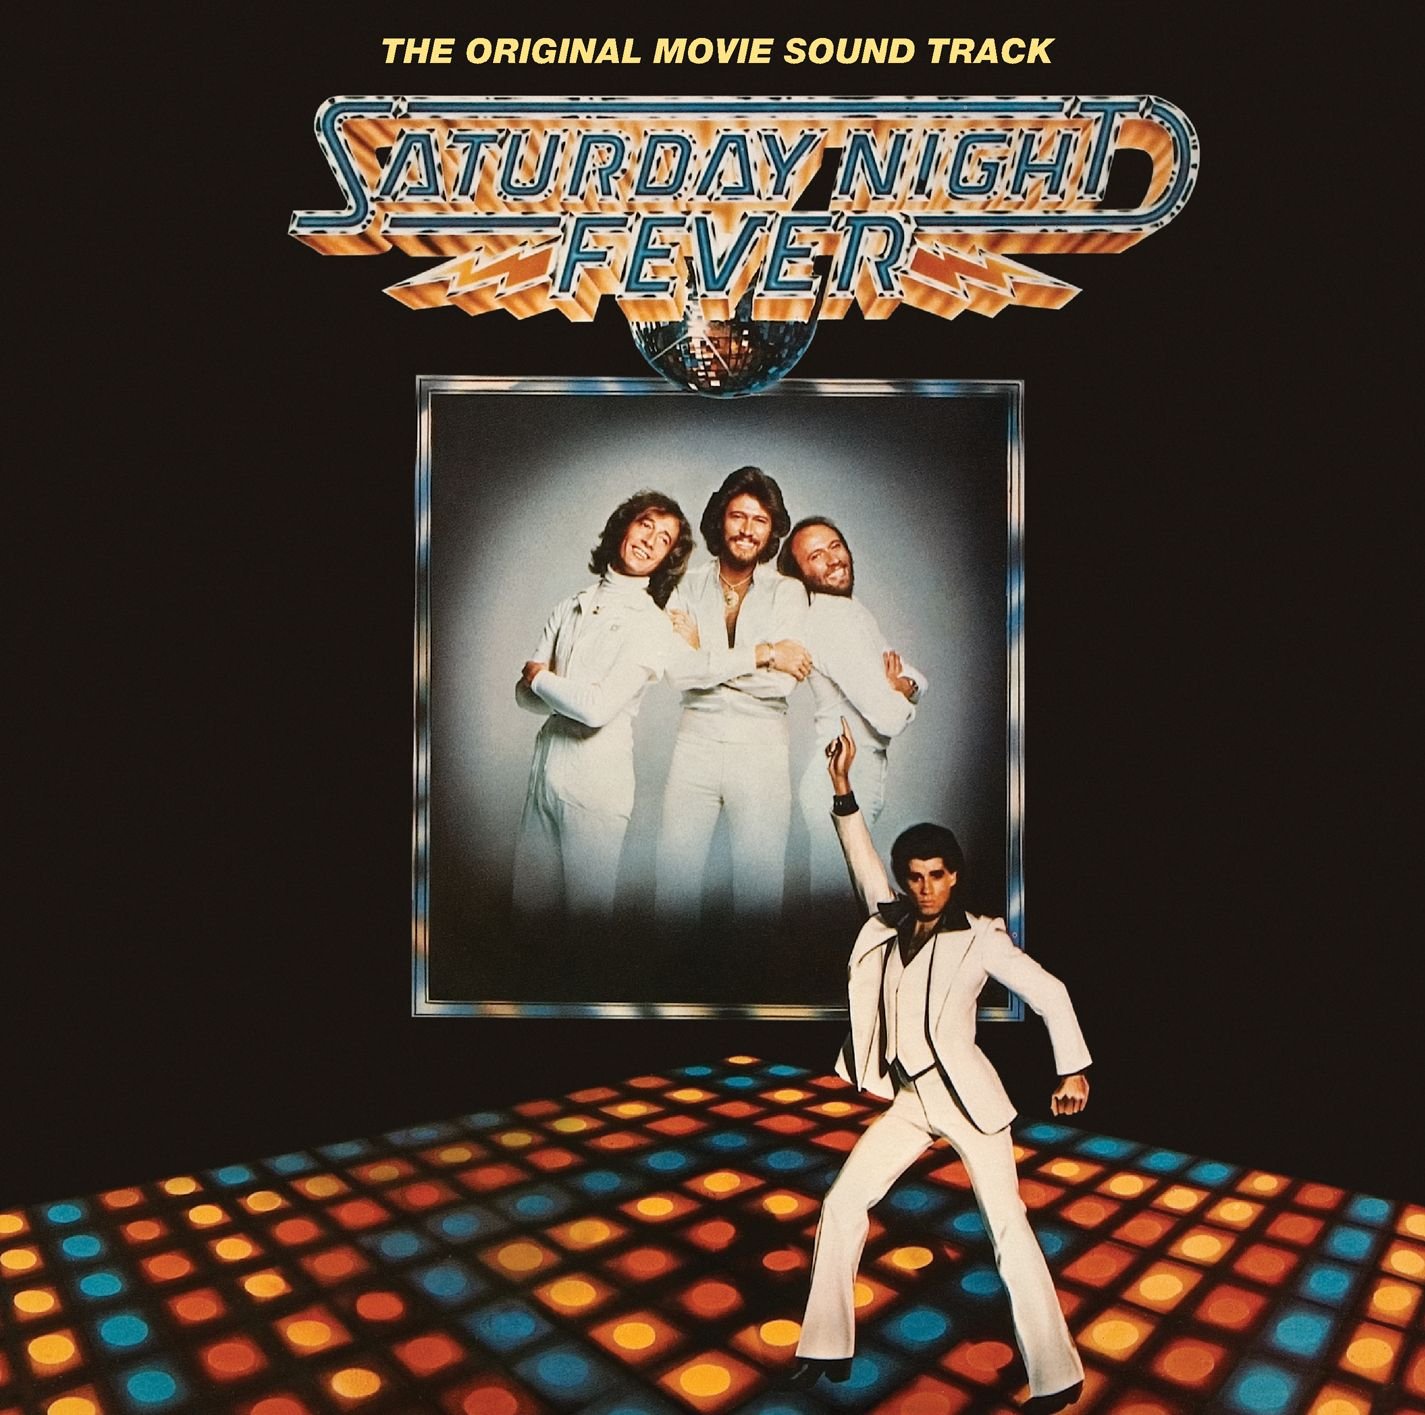 BSO "Saturday Night Fever" 2CD